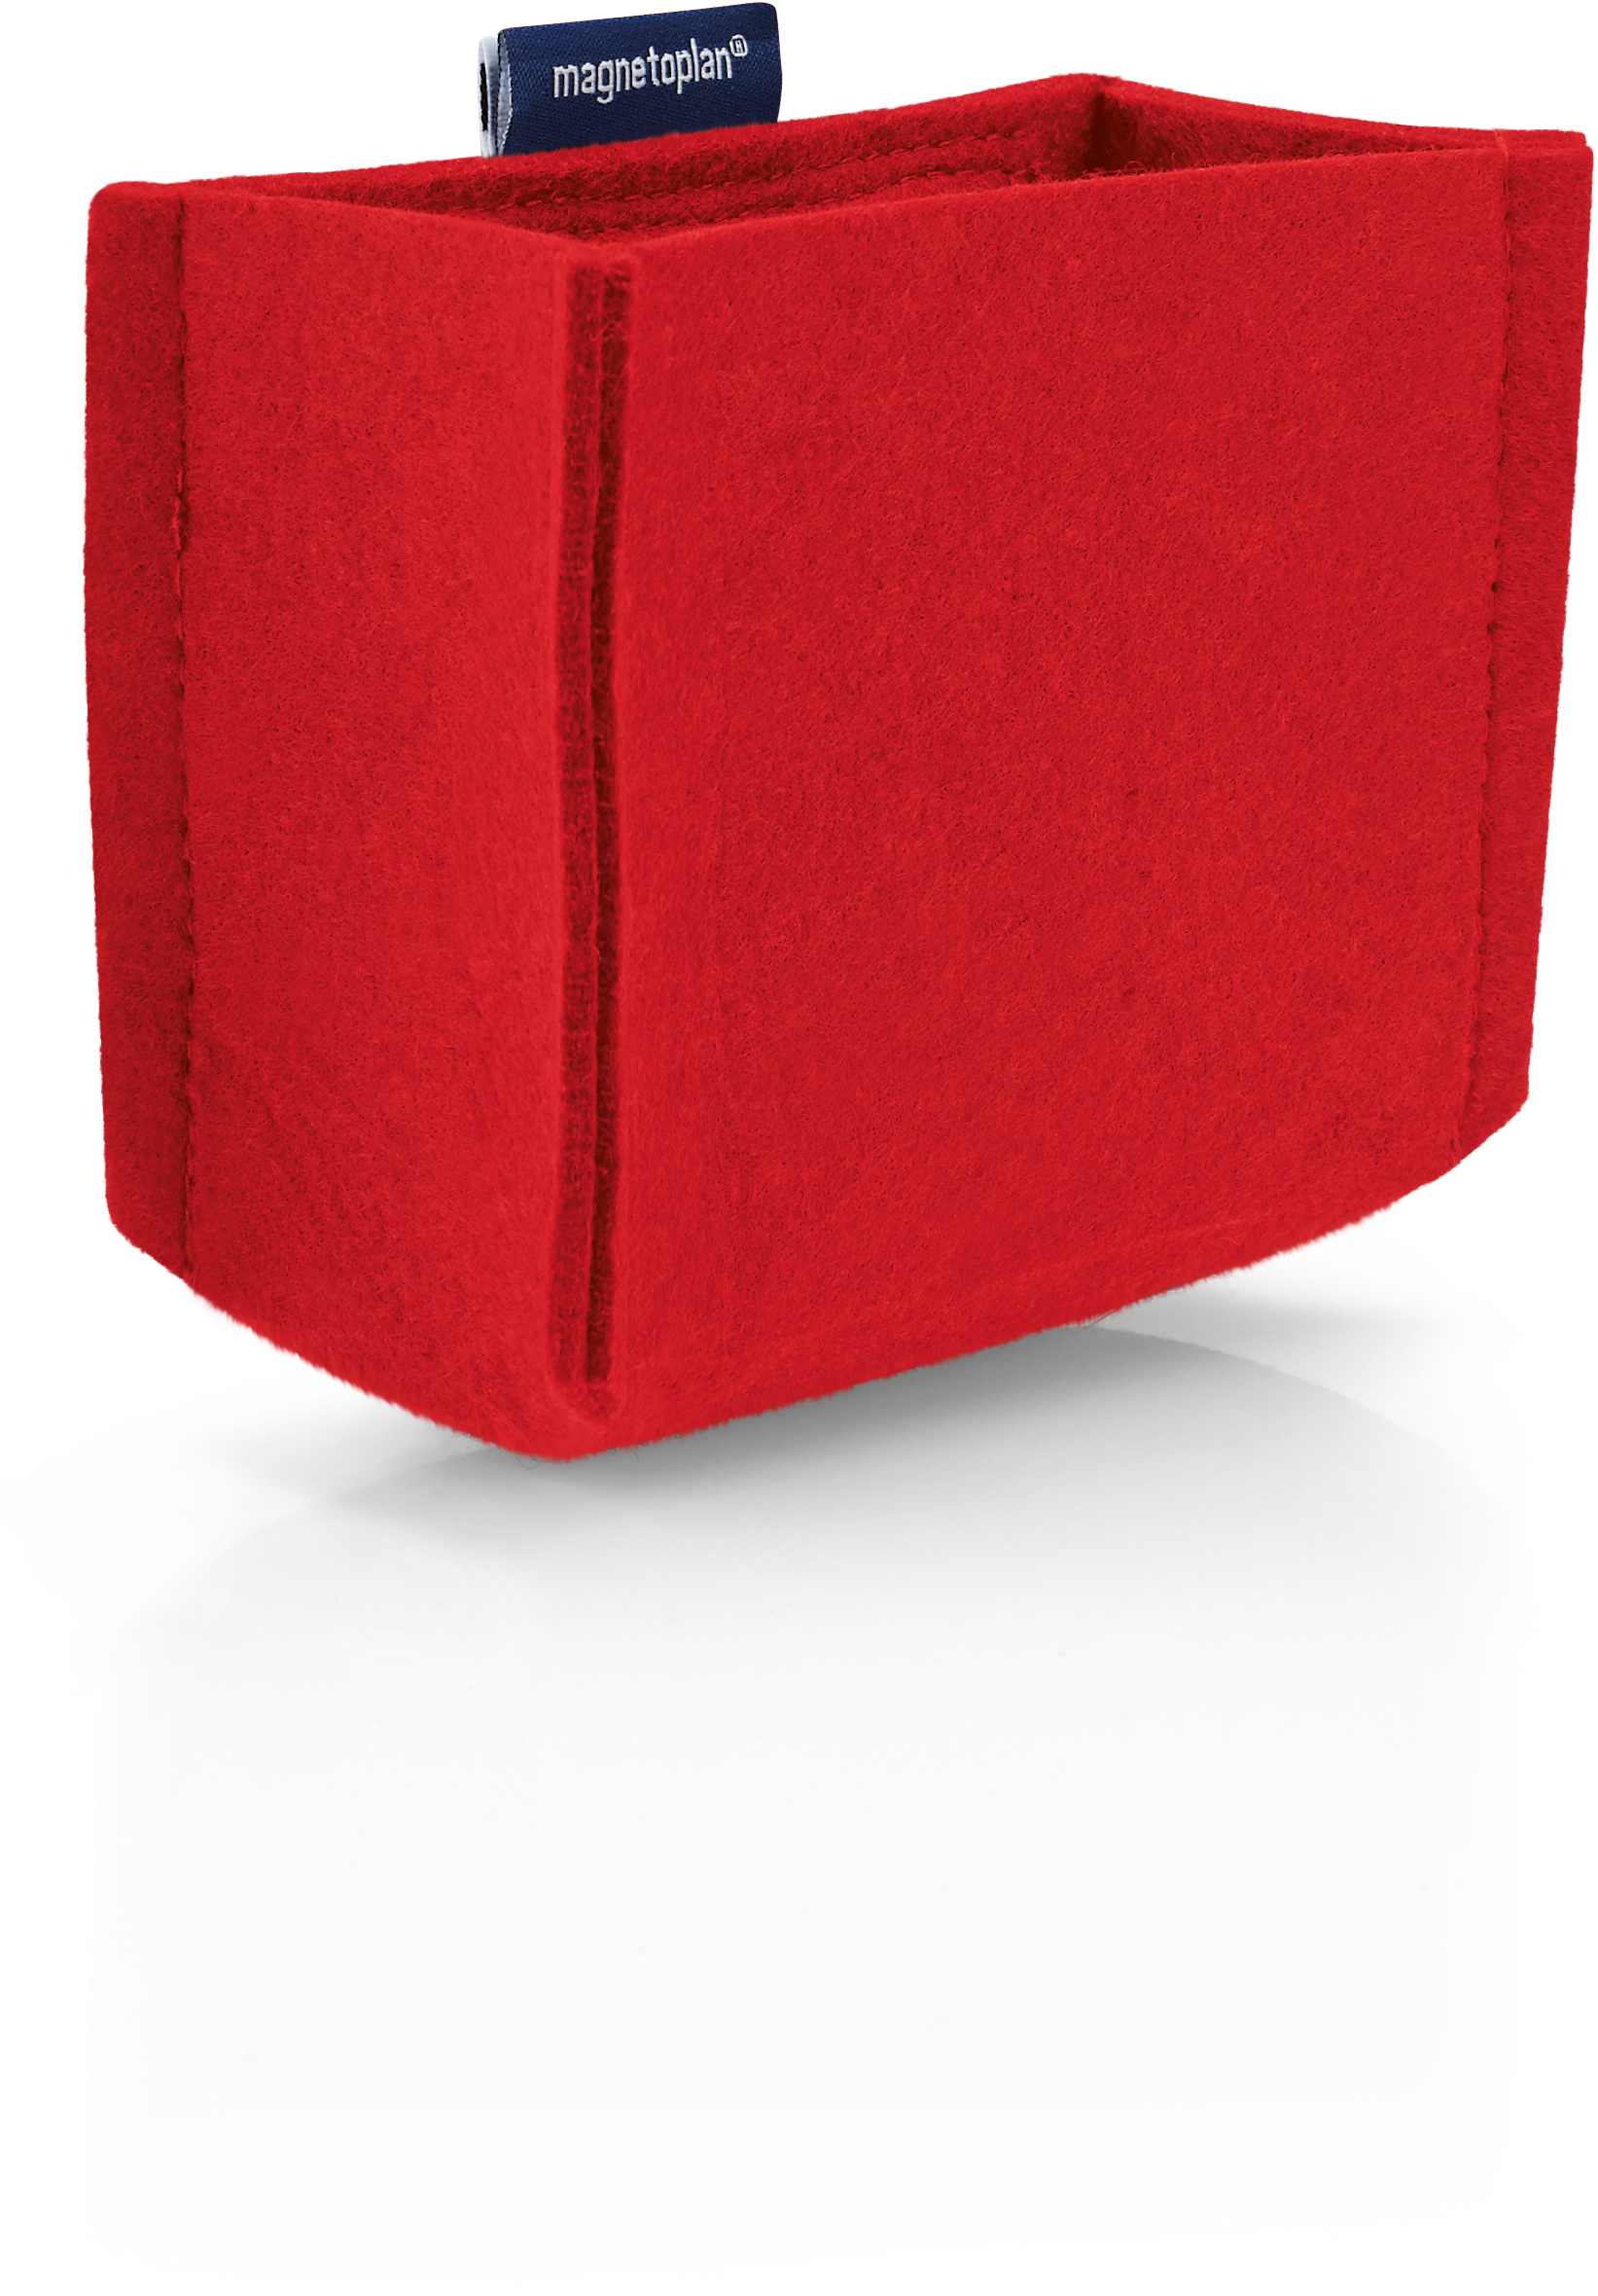 MAGNETOPLAN Porte stylo magnetoTray M 1227706 rouge, feutre recyclé rouge, feutre recyclé